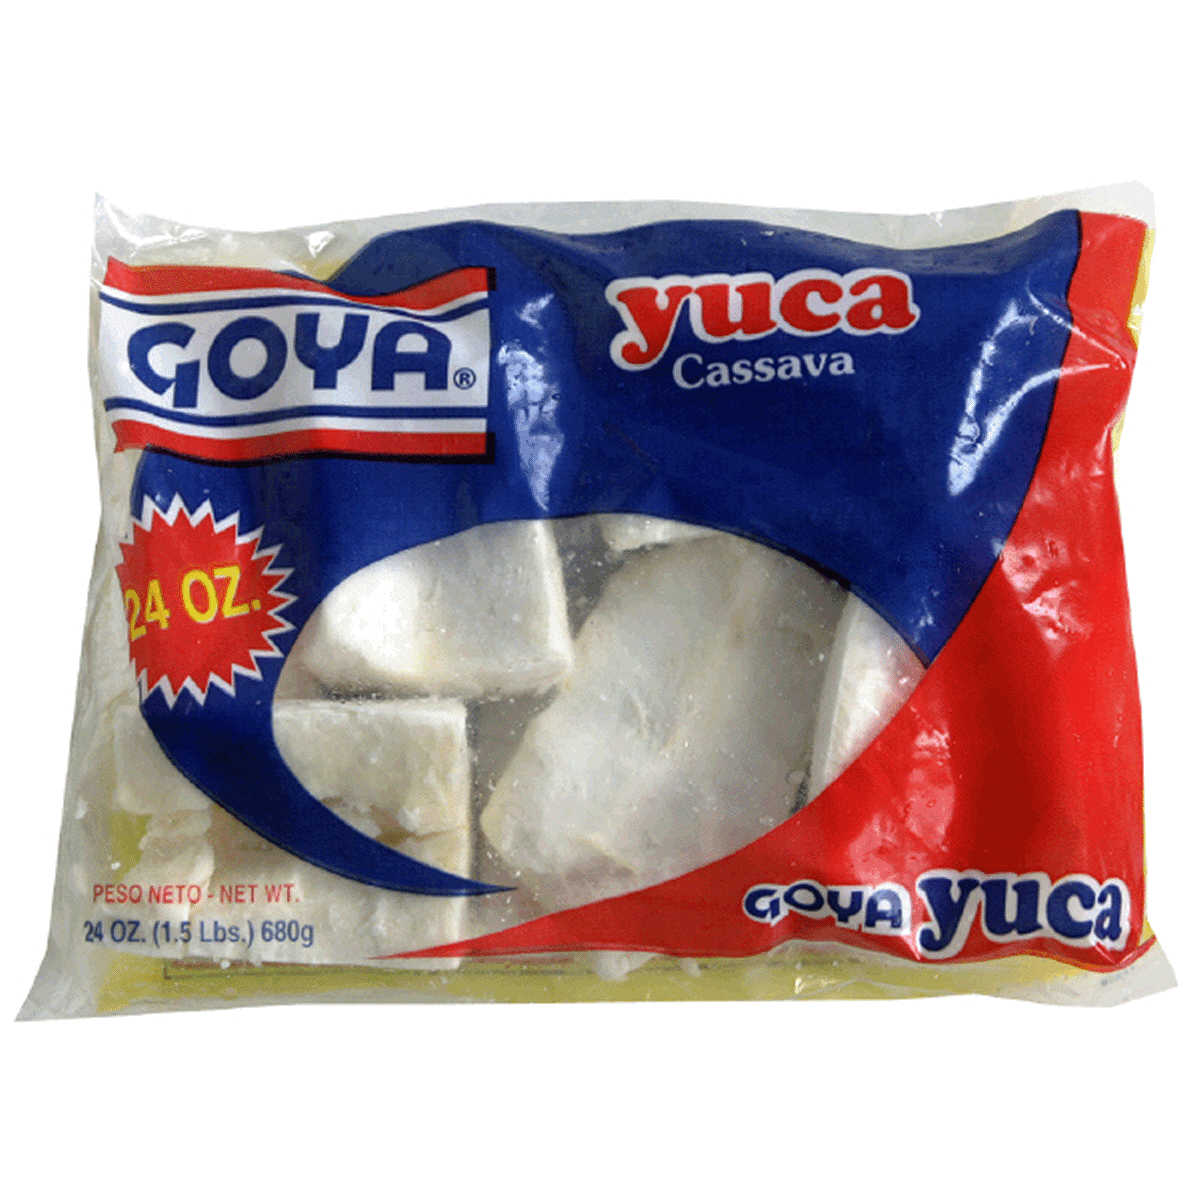 Goya - Cassava Yuca 24oz